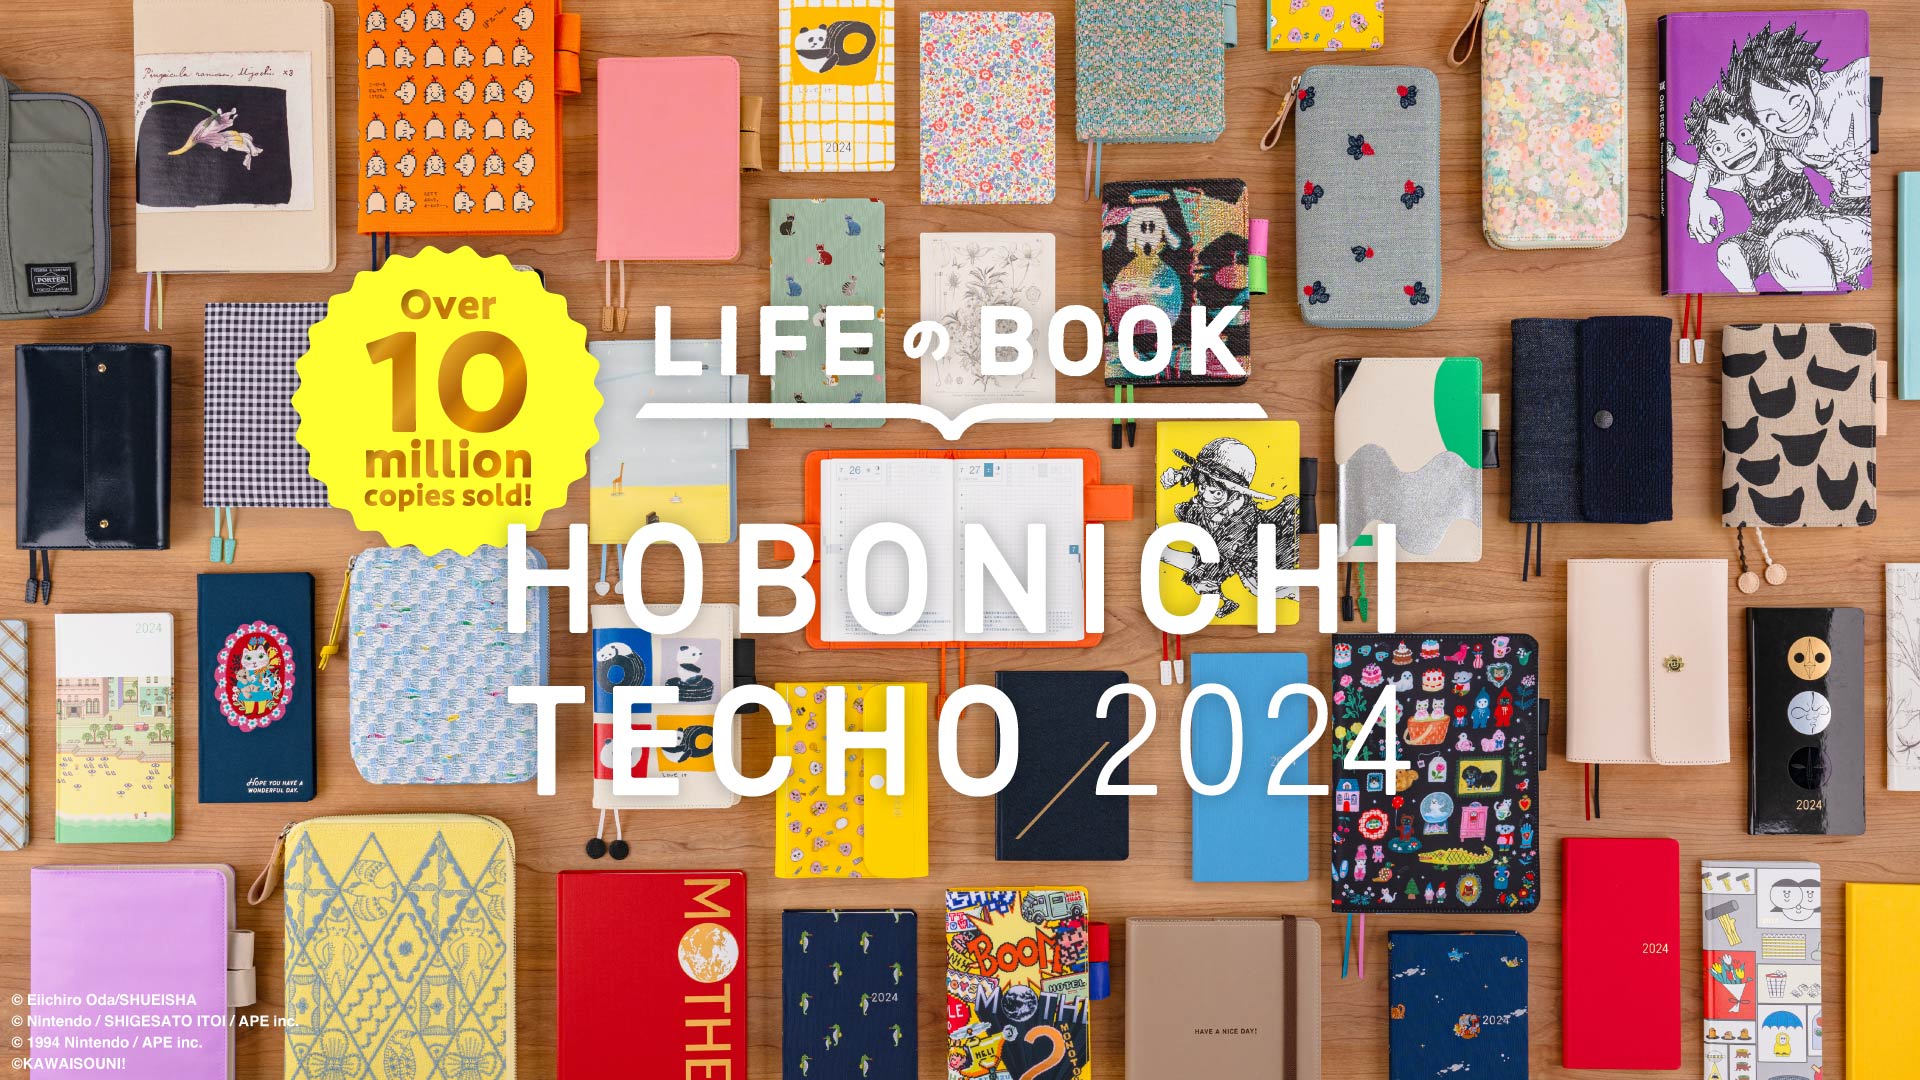 Hobonichi Weekly Calendar 2024 - Accessories Lineup - Accessories